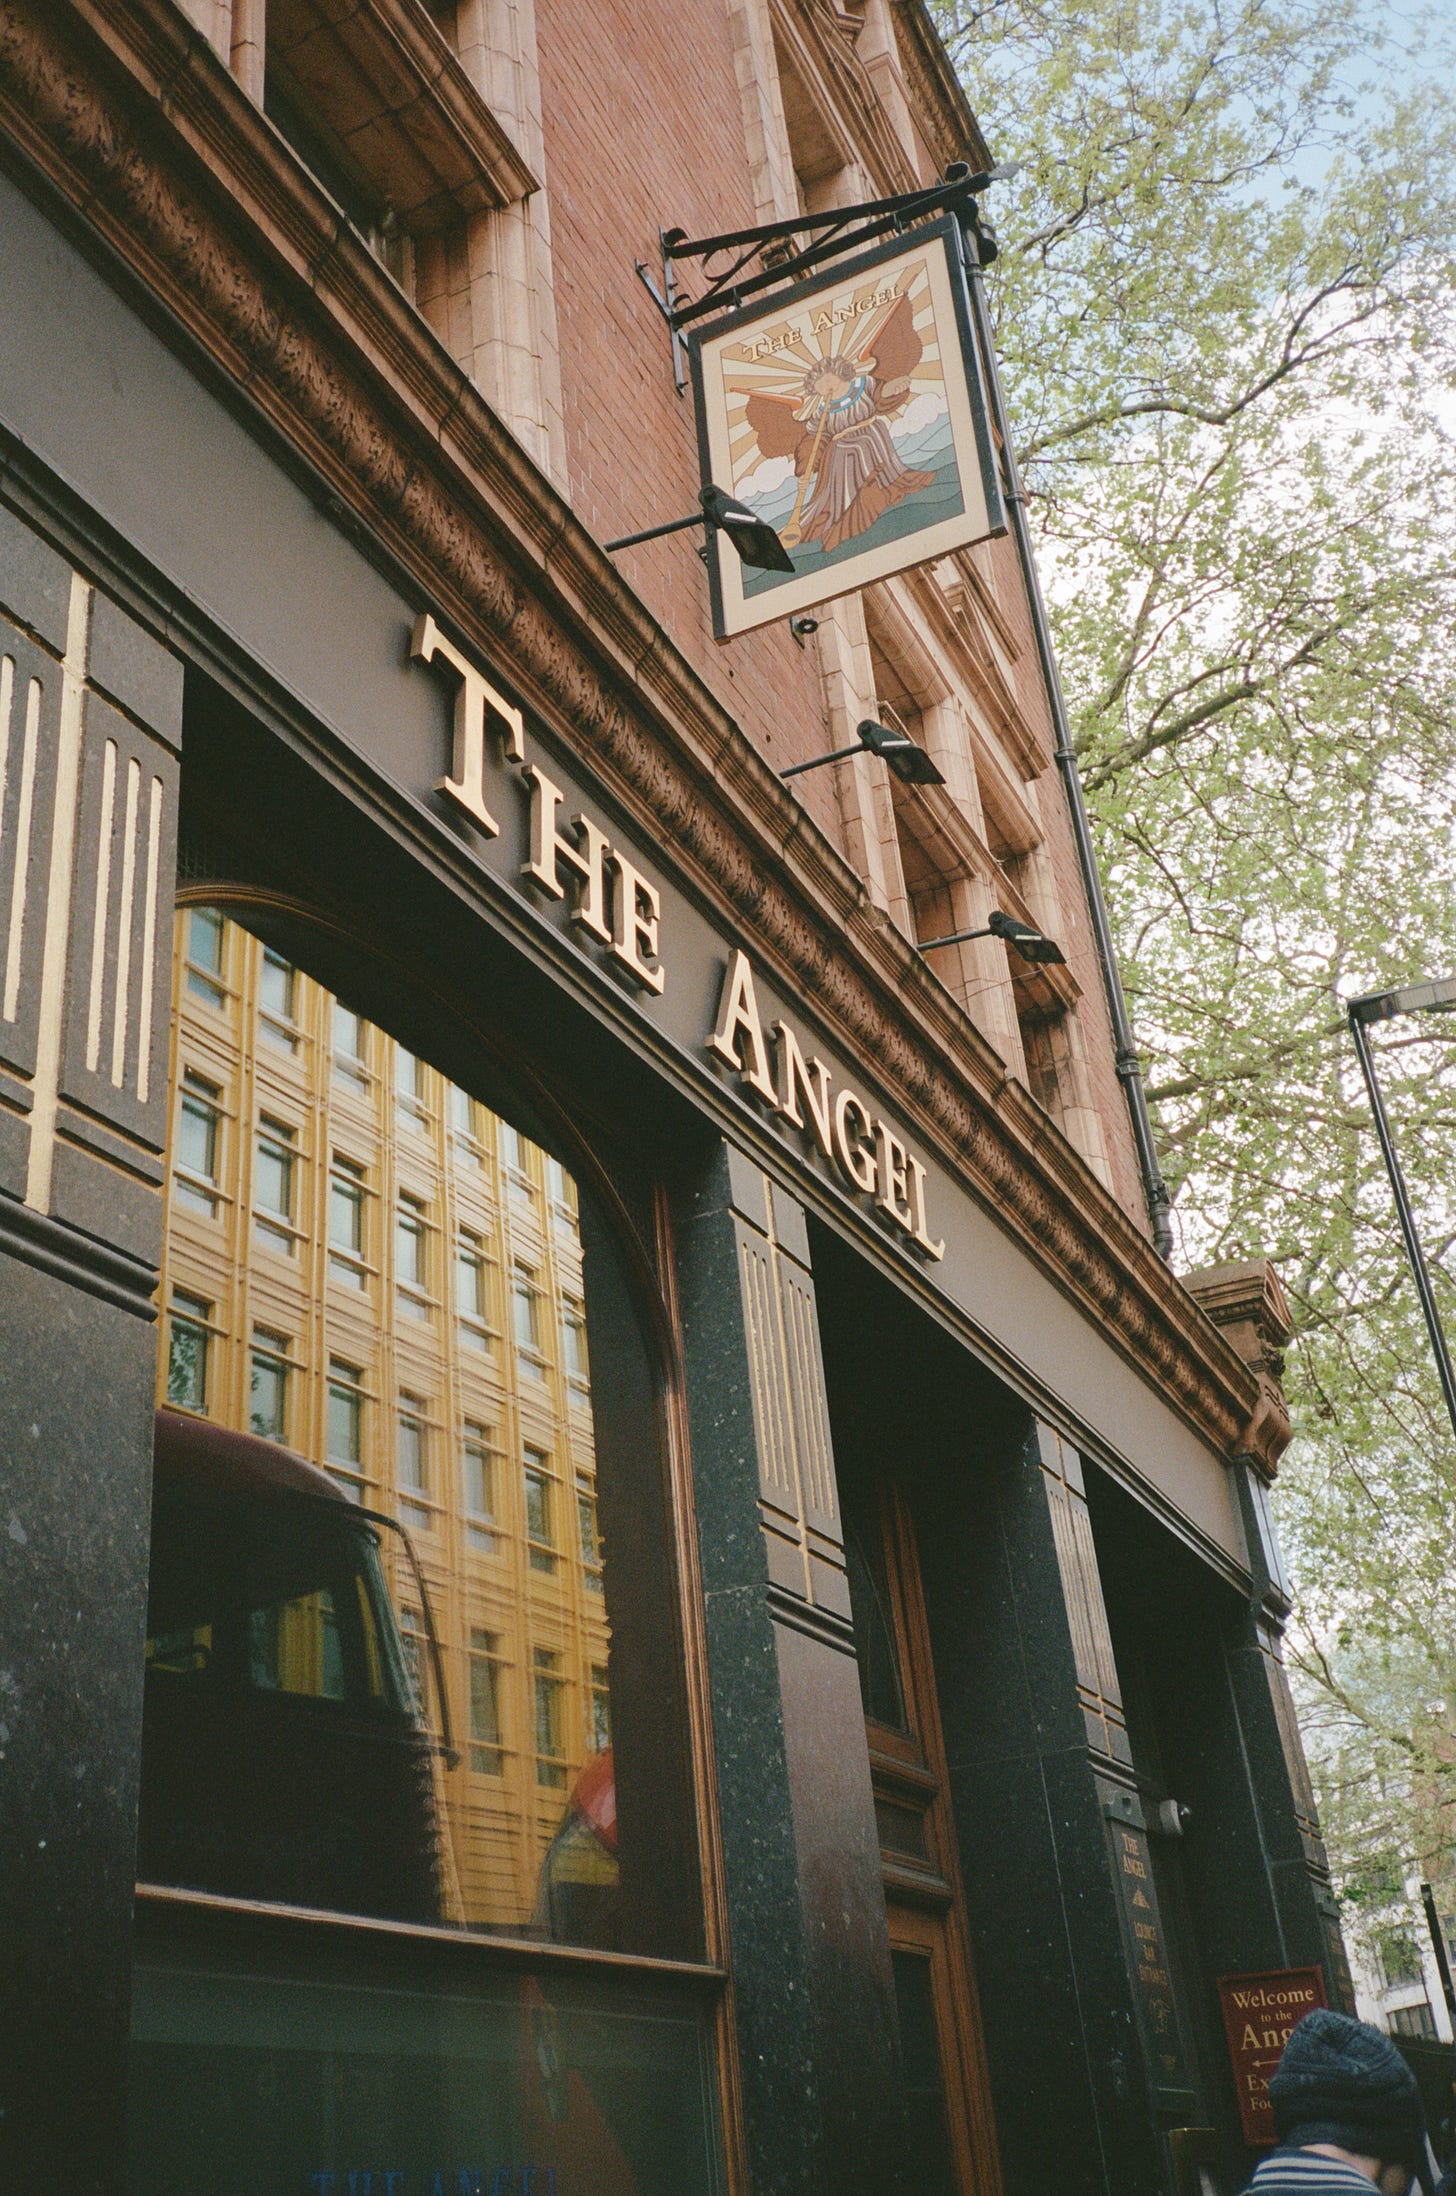 A London pub called The Angel :)